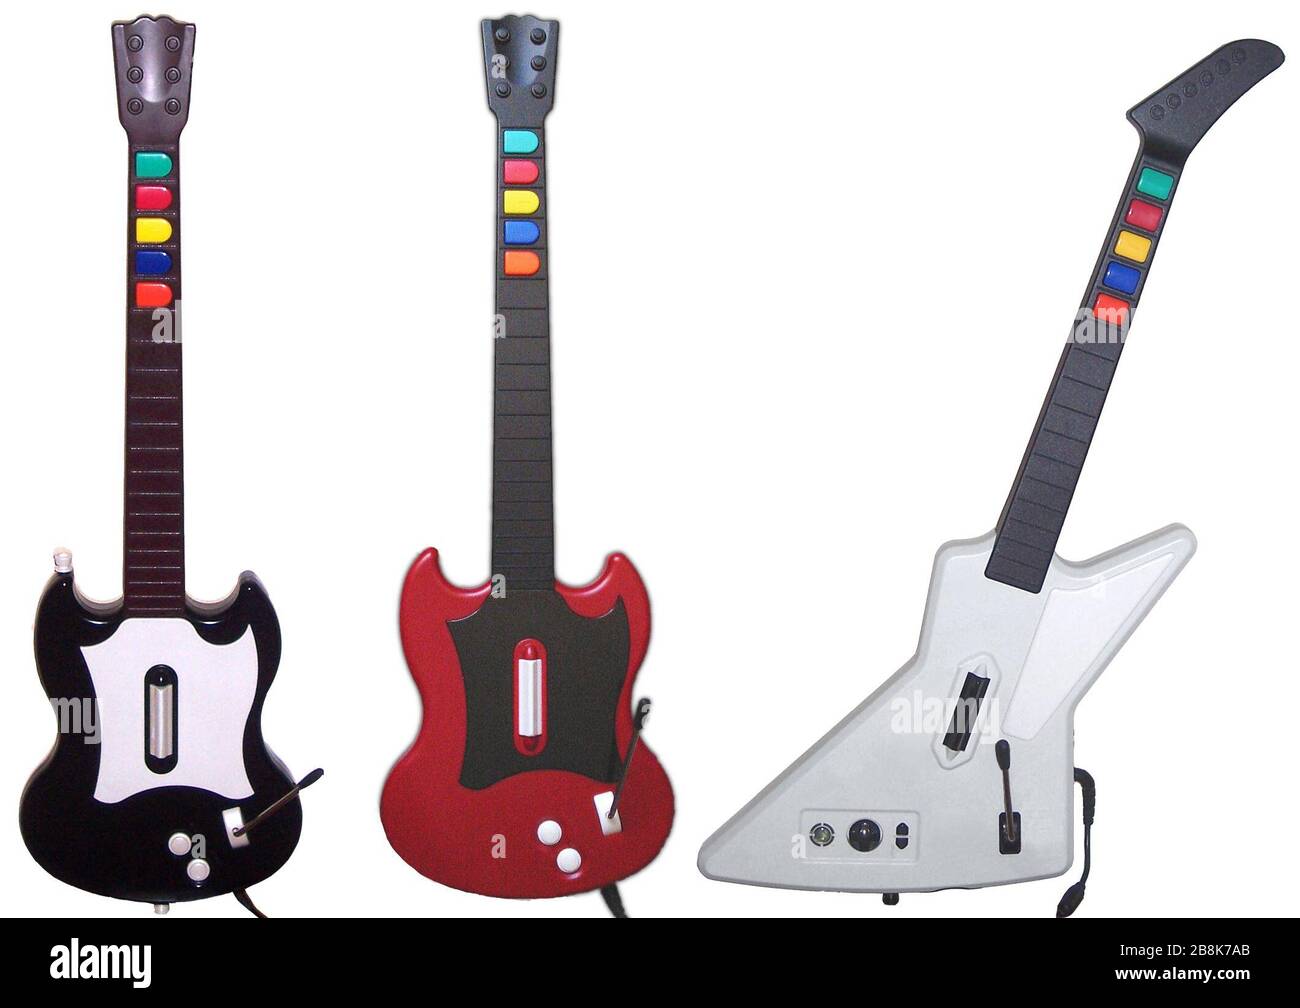 English: Guitare du jeu Guitar Hero II. of the guitar controller for the